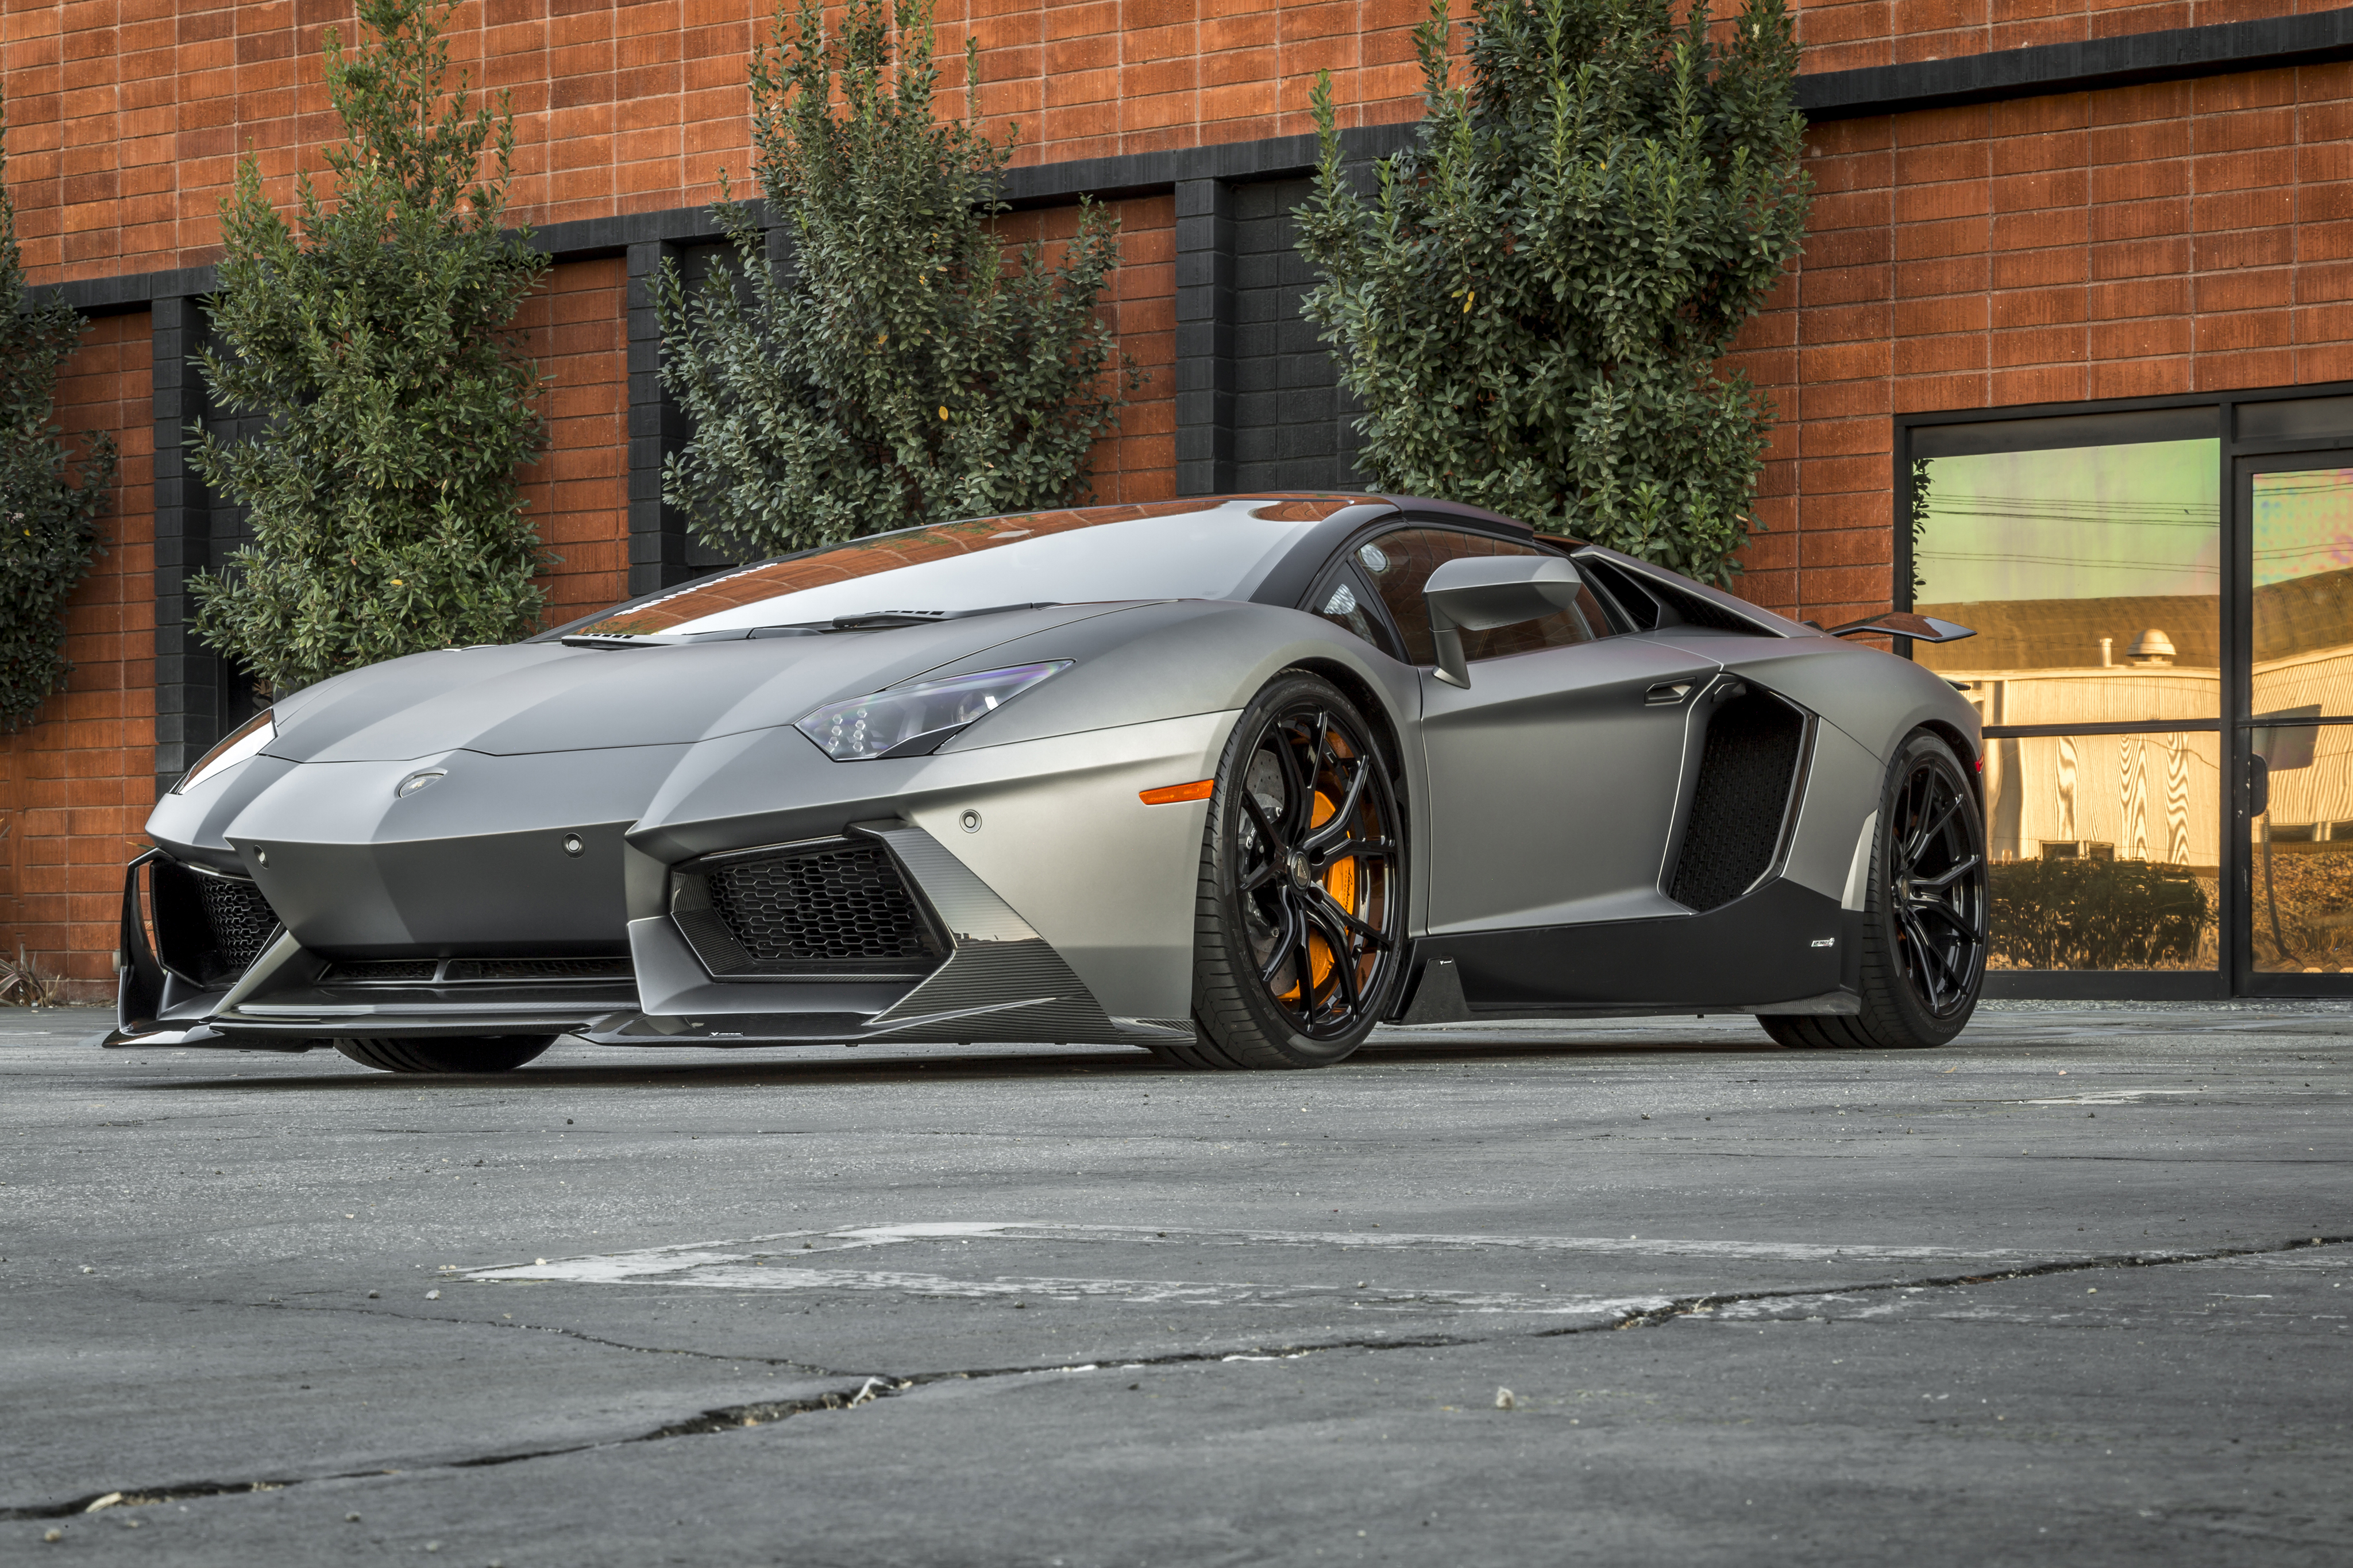 Скачать обои Lamborghini Aventador Сарагоса Edizione на телефон бесплатно